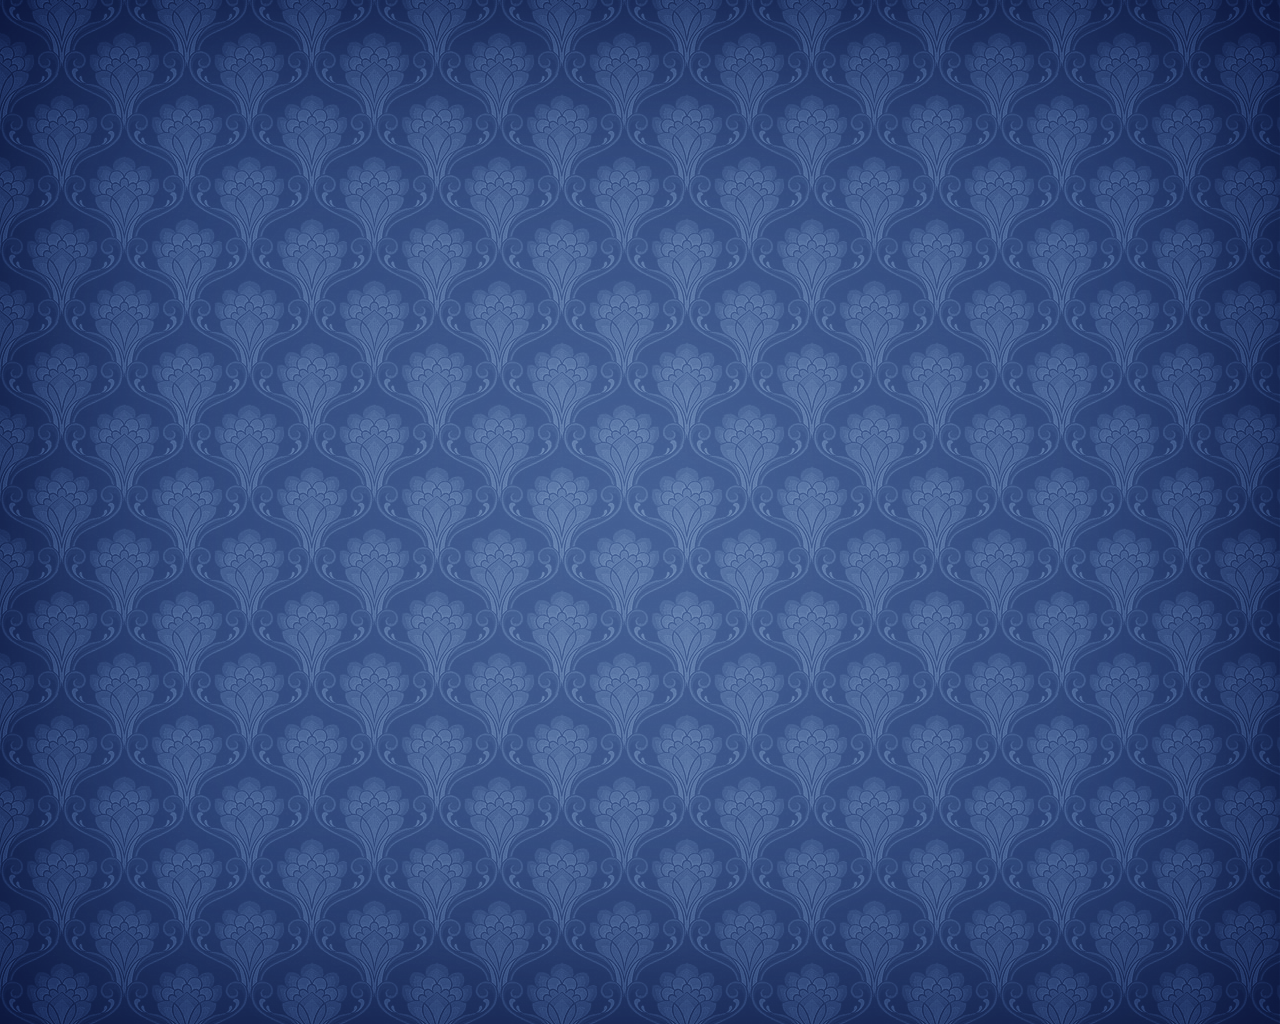 Pattern Wallpaper Template by ~lukeroberts on deviantART